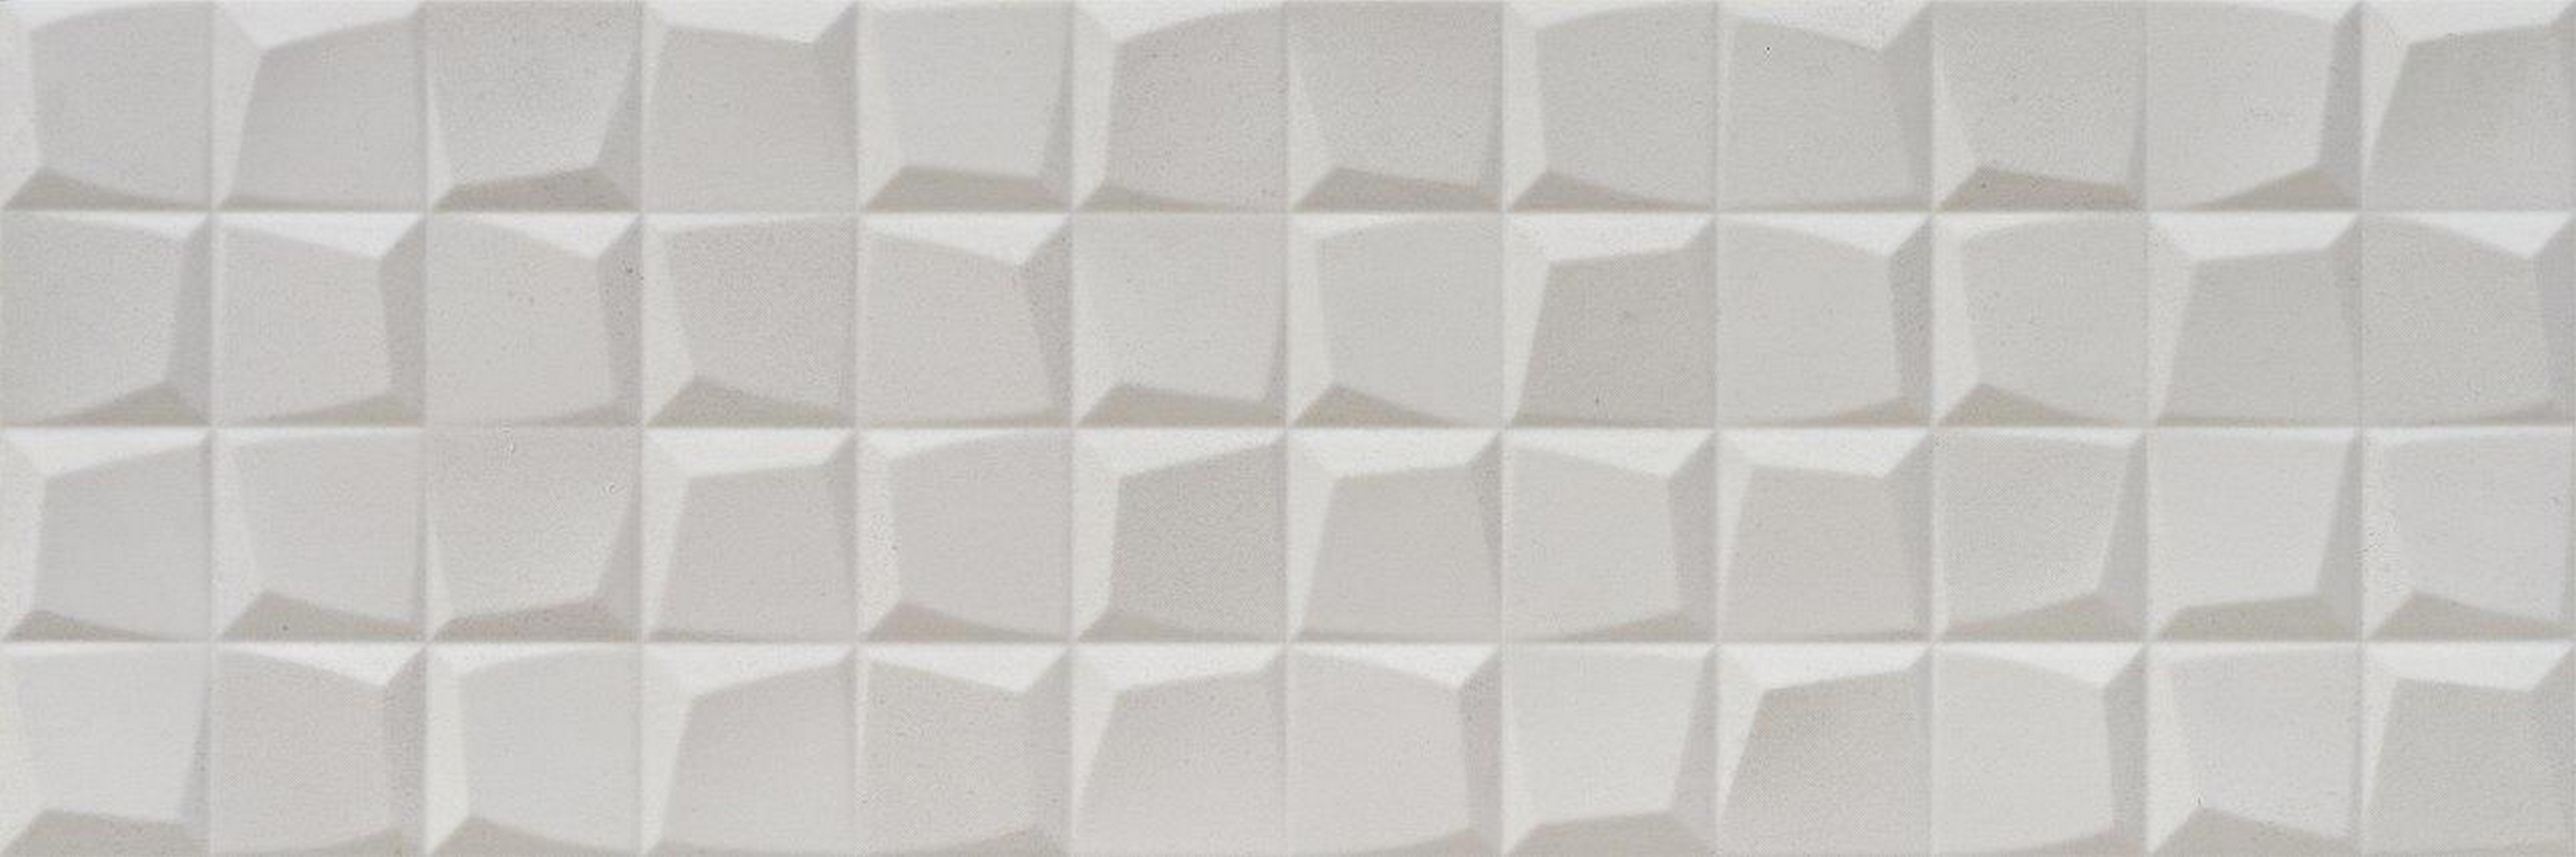 Azulejo manchester efecto relieve, cemento, mosaico blanco 30x90 cm